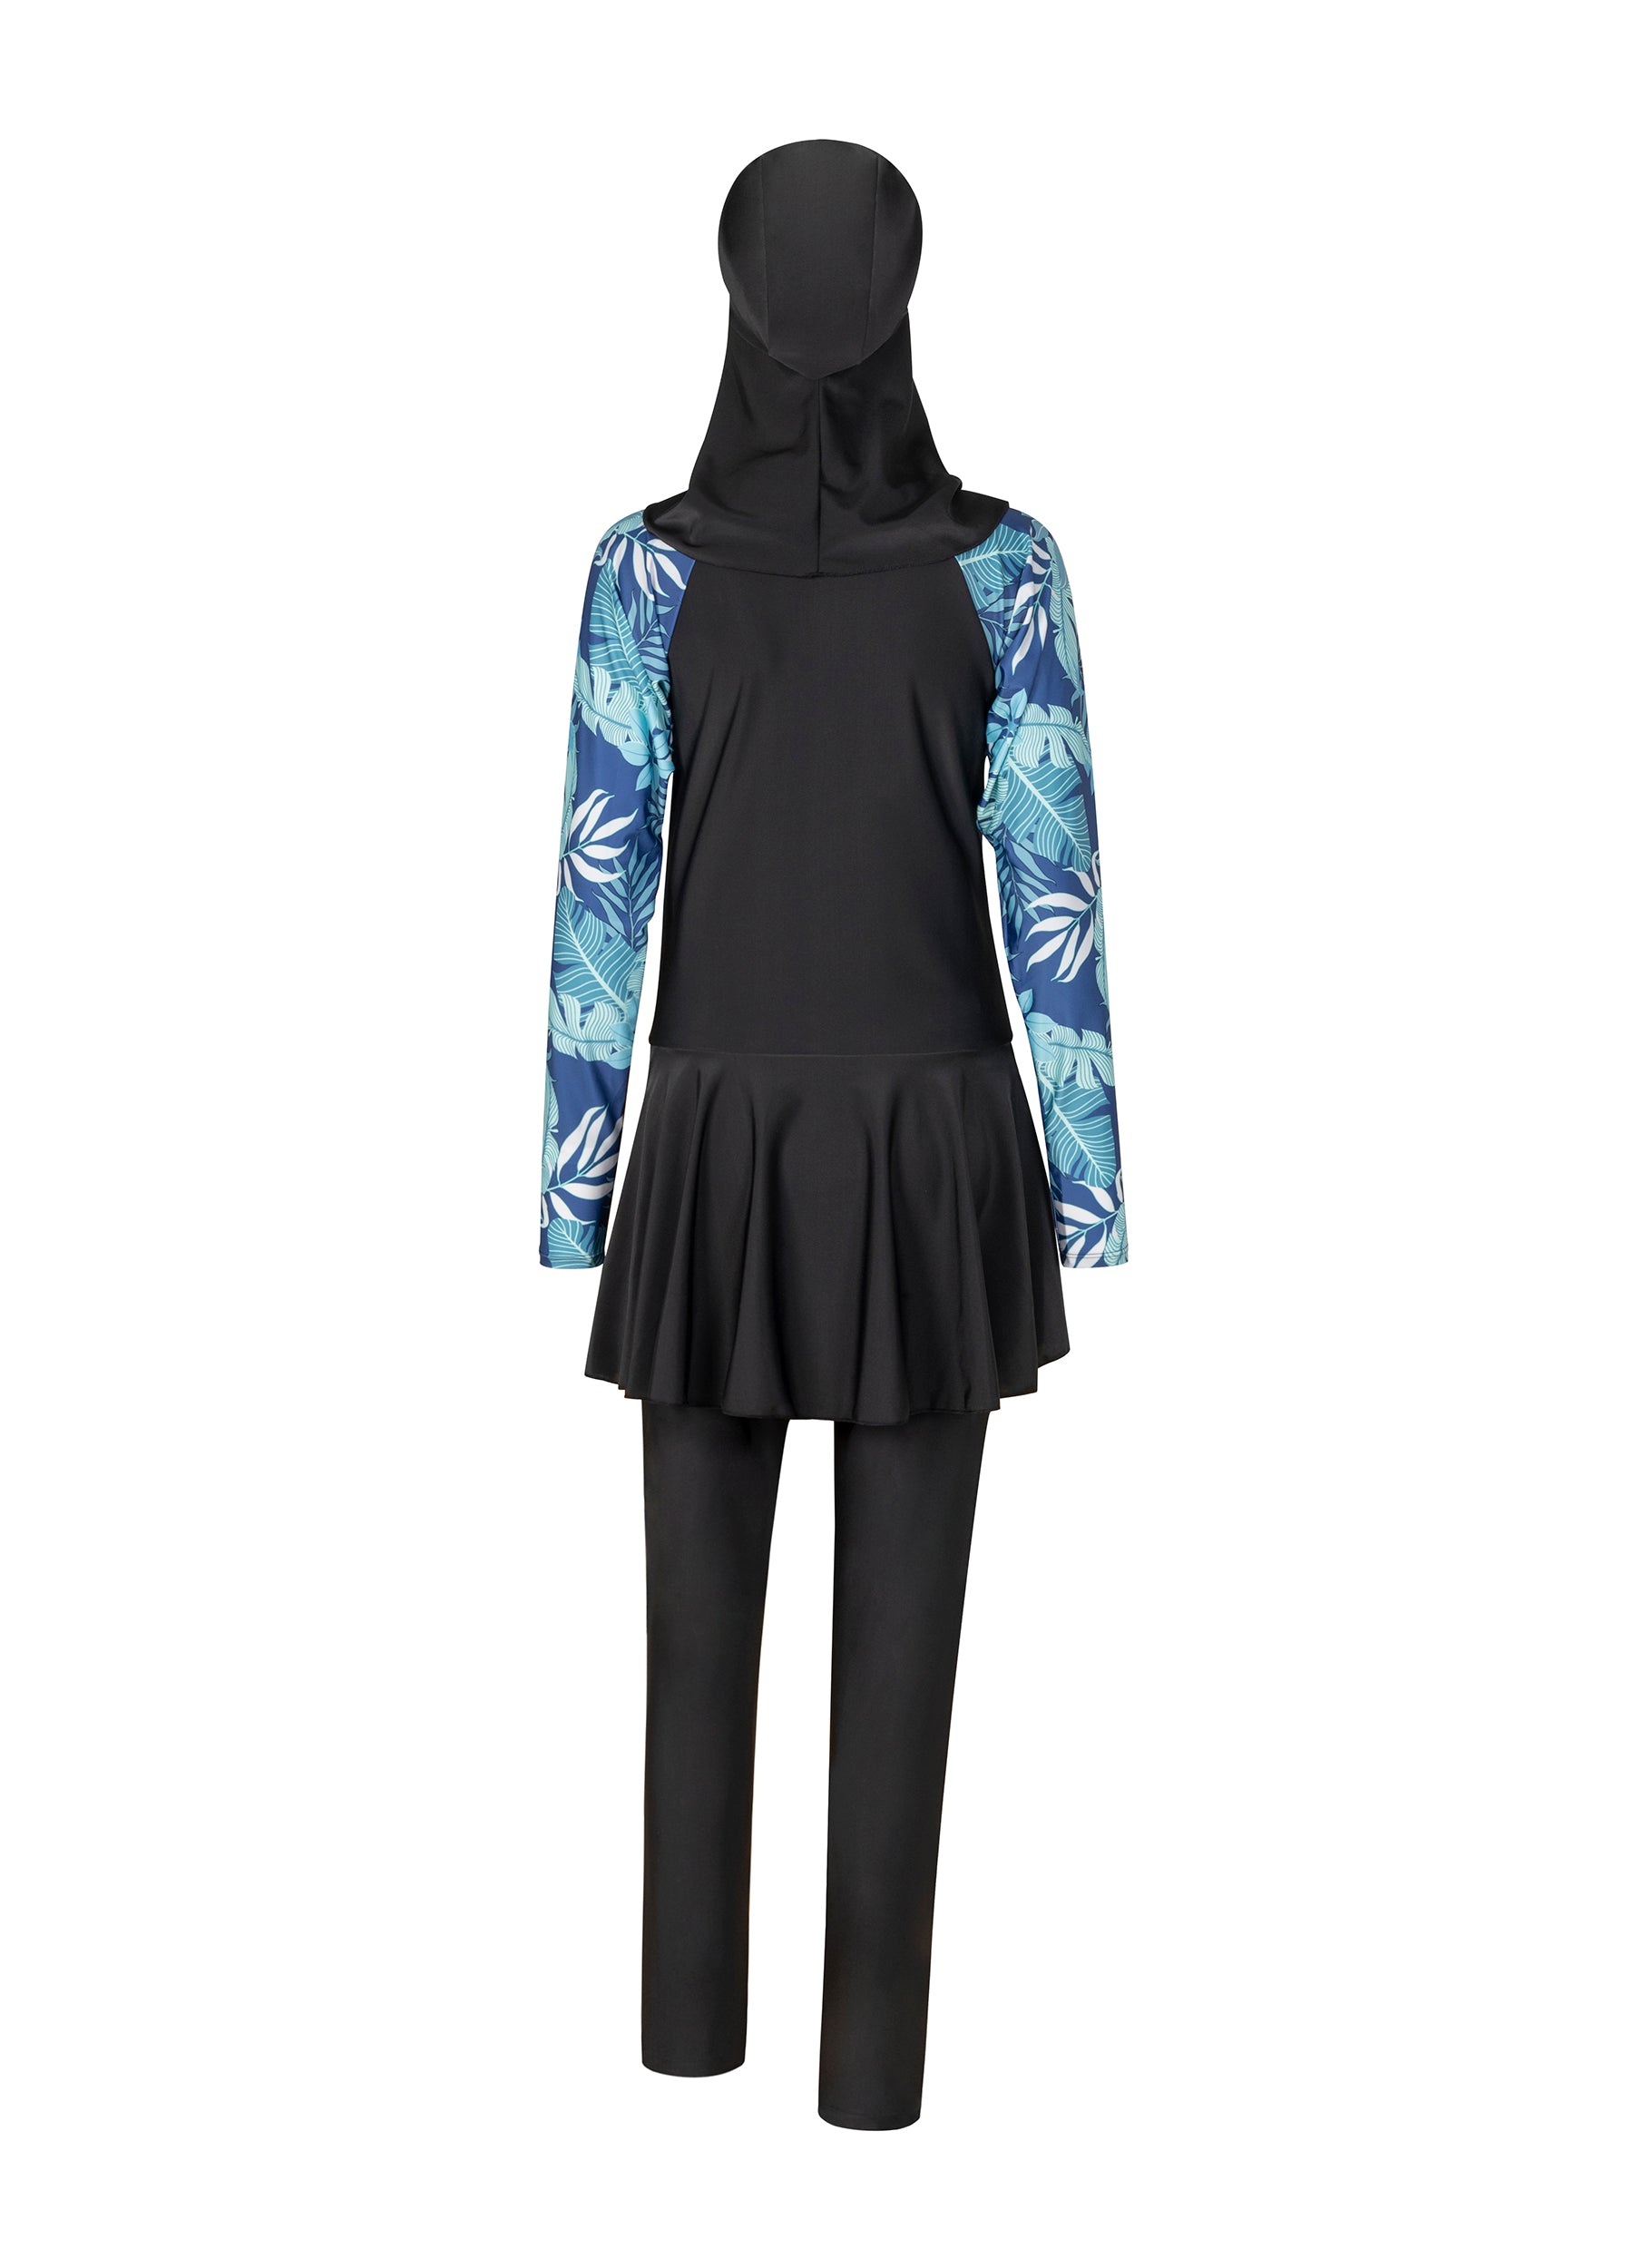 muslim swimming suits/islamic swimming suits/4POSE Women's Tropical Print Peplum Hem Full Coverage Swimsuit-Black base match print pattern back view